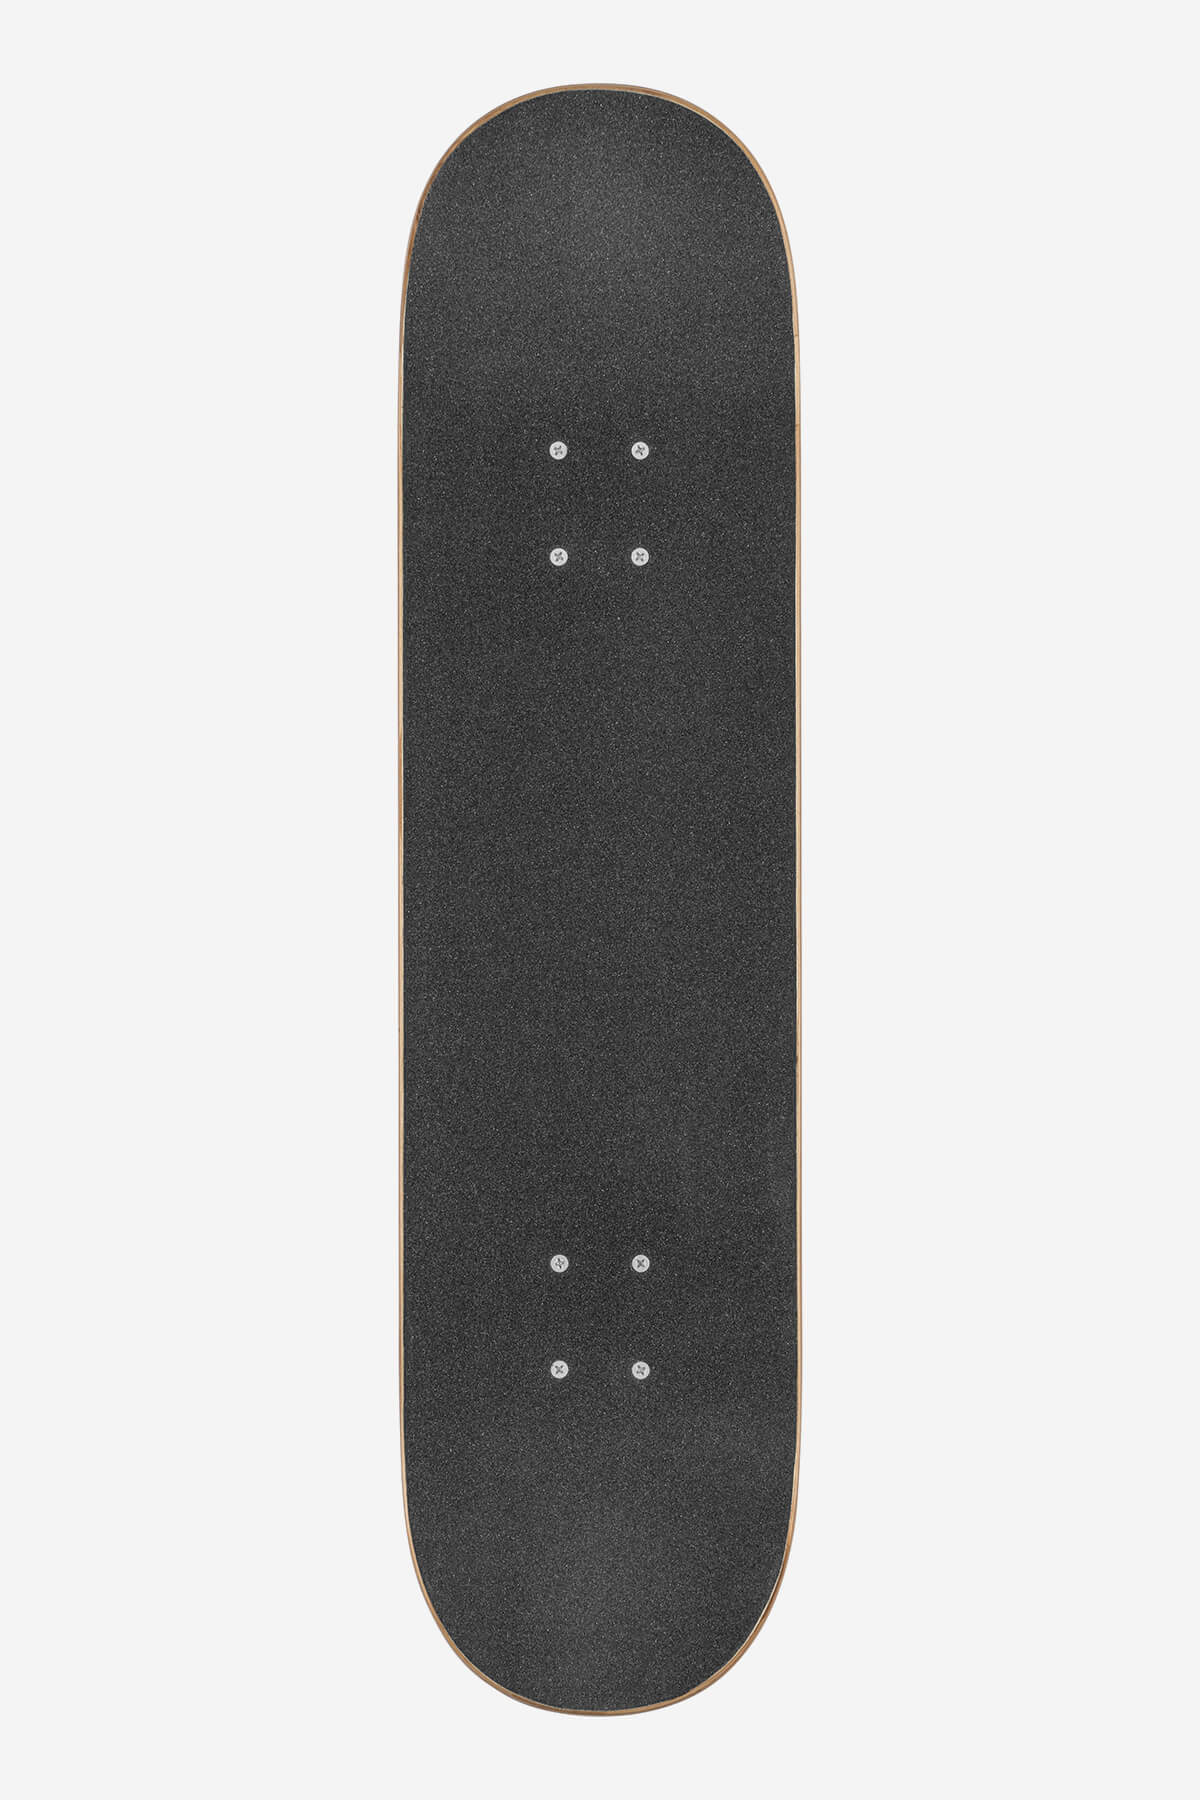 Globe - G0 Fubar - White/Schwarz - 8.0" Komplett Skateboard